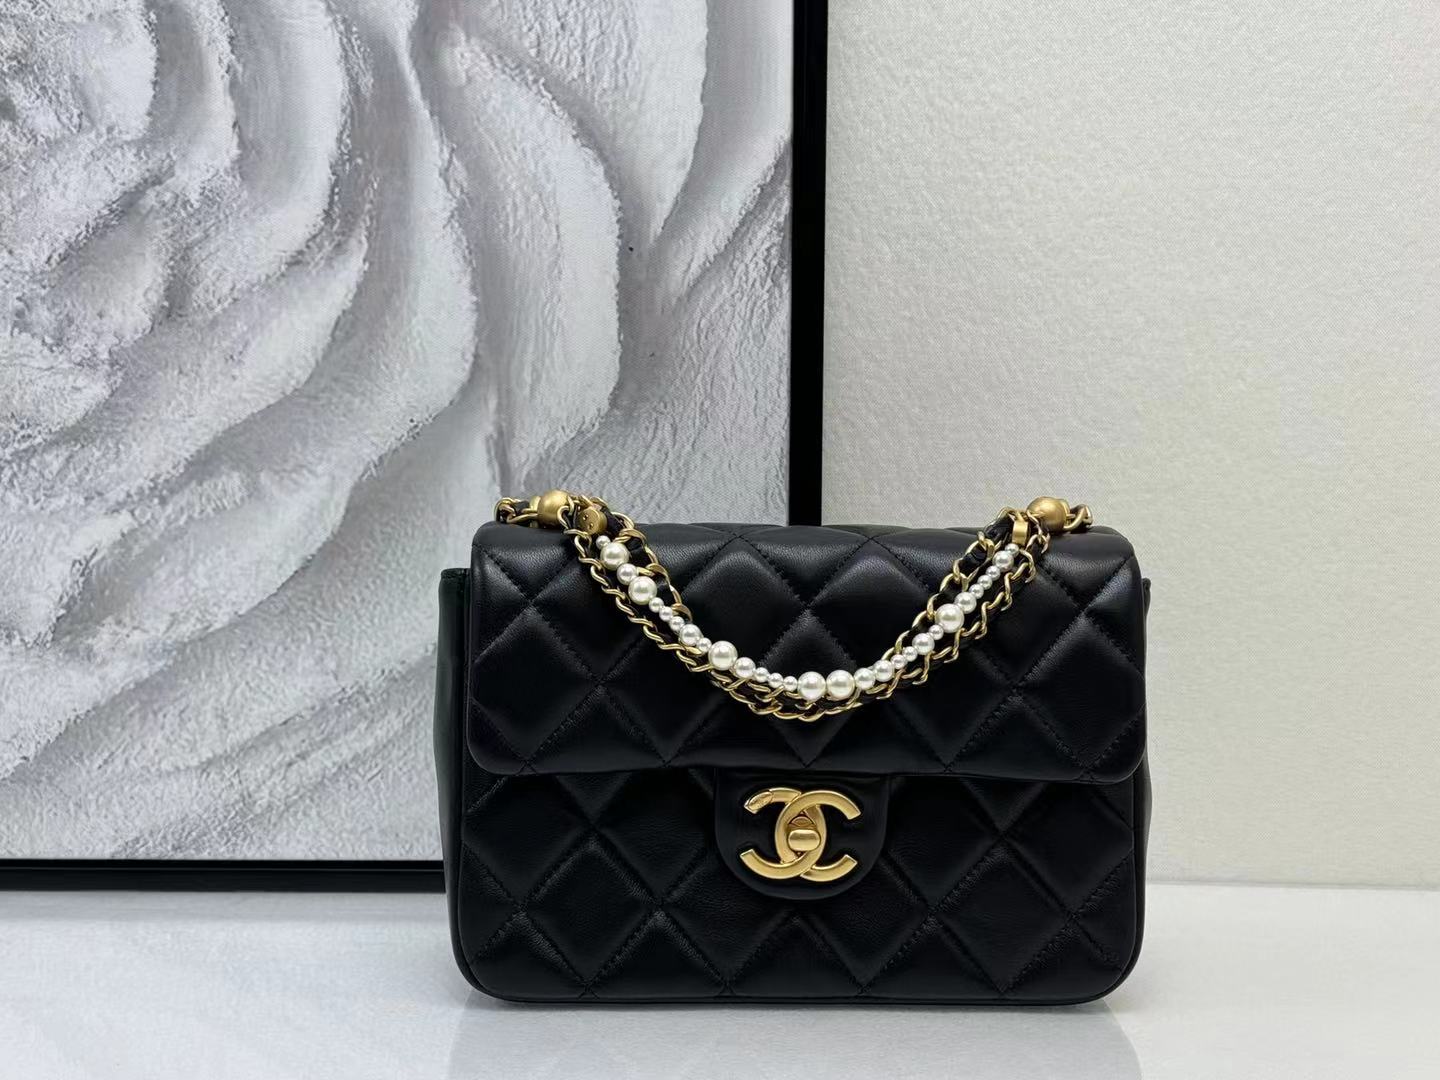 Chanel bag size 19.5cm CHB717